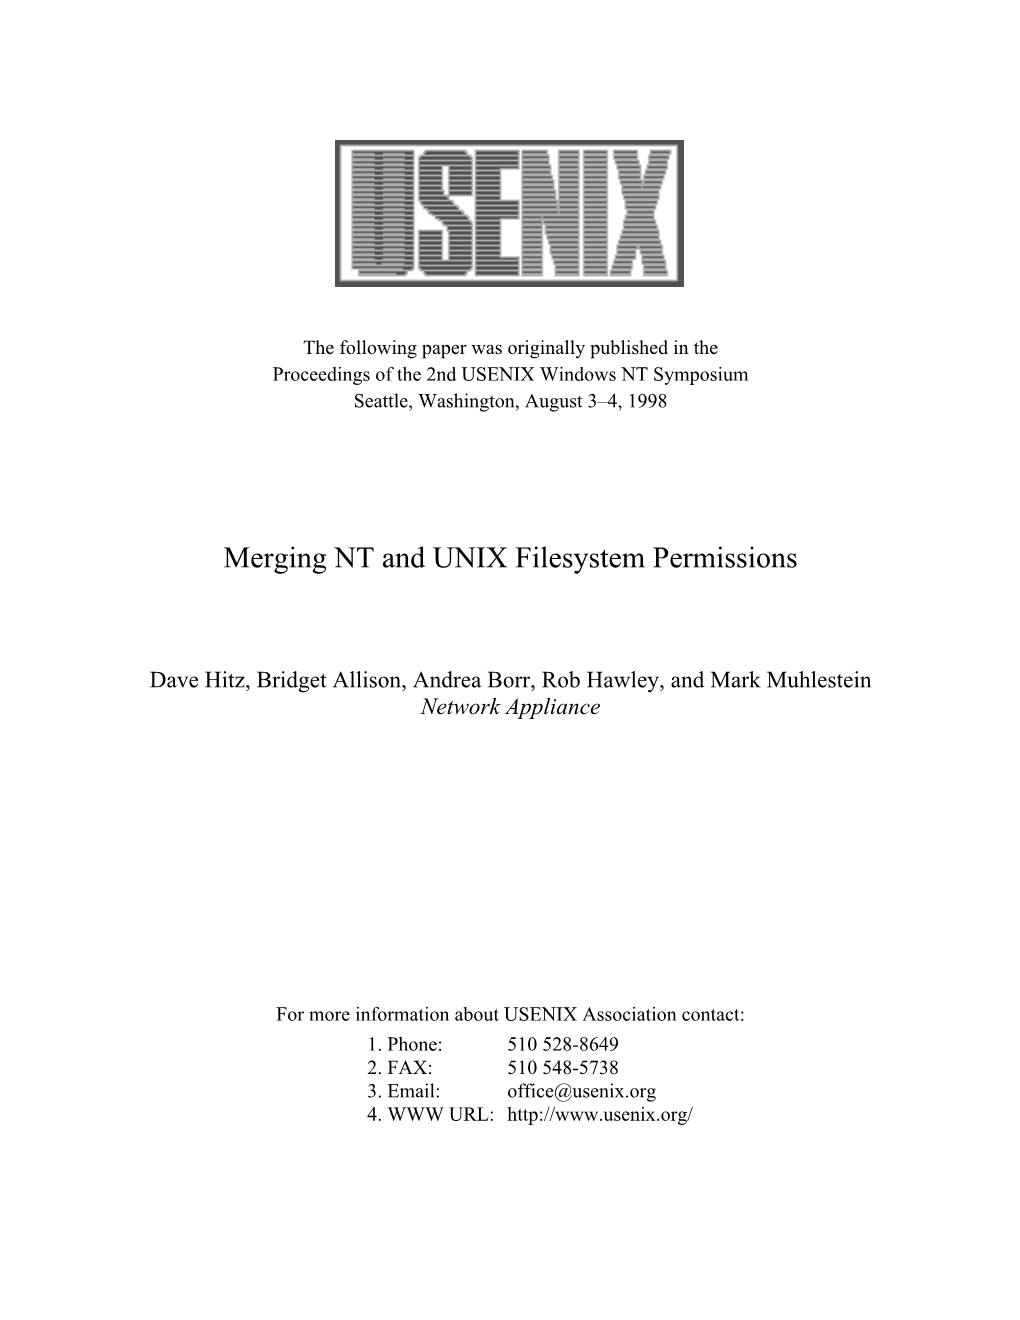 Merging NT and UNIX Filesystem Permissions